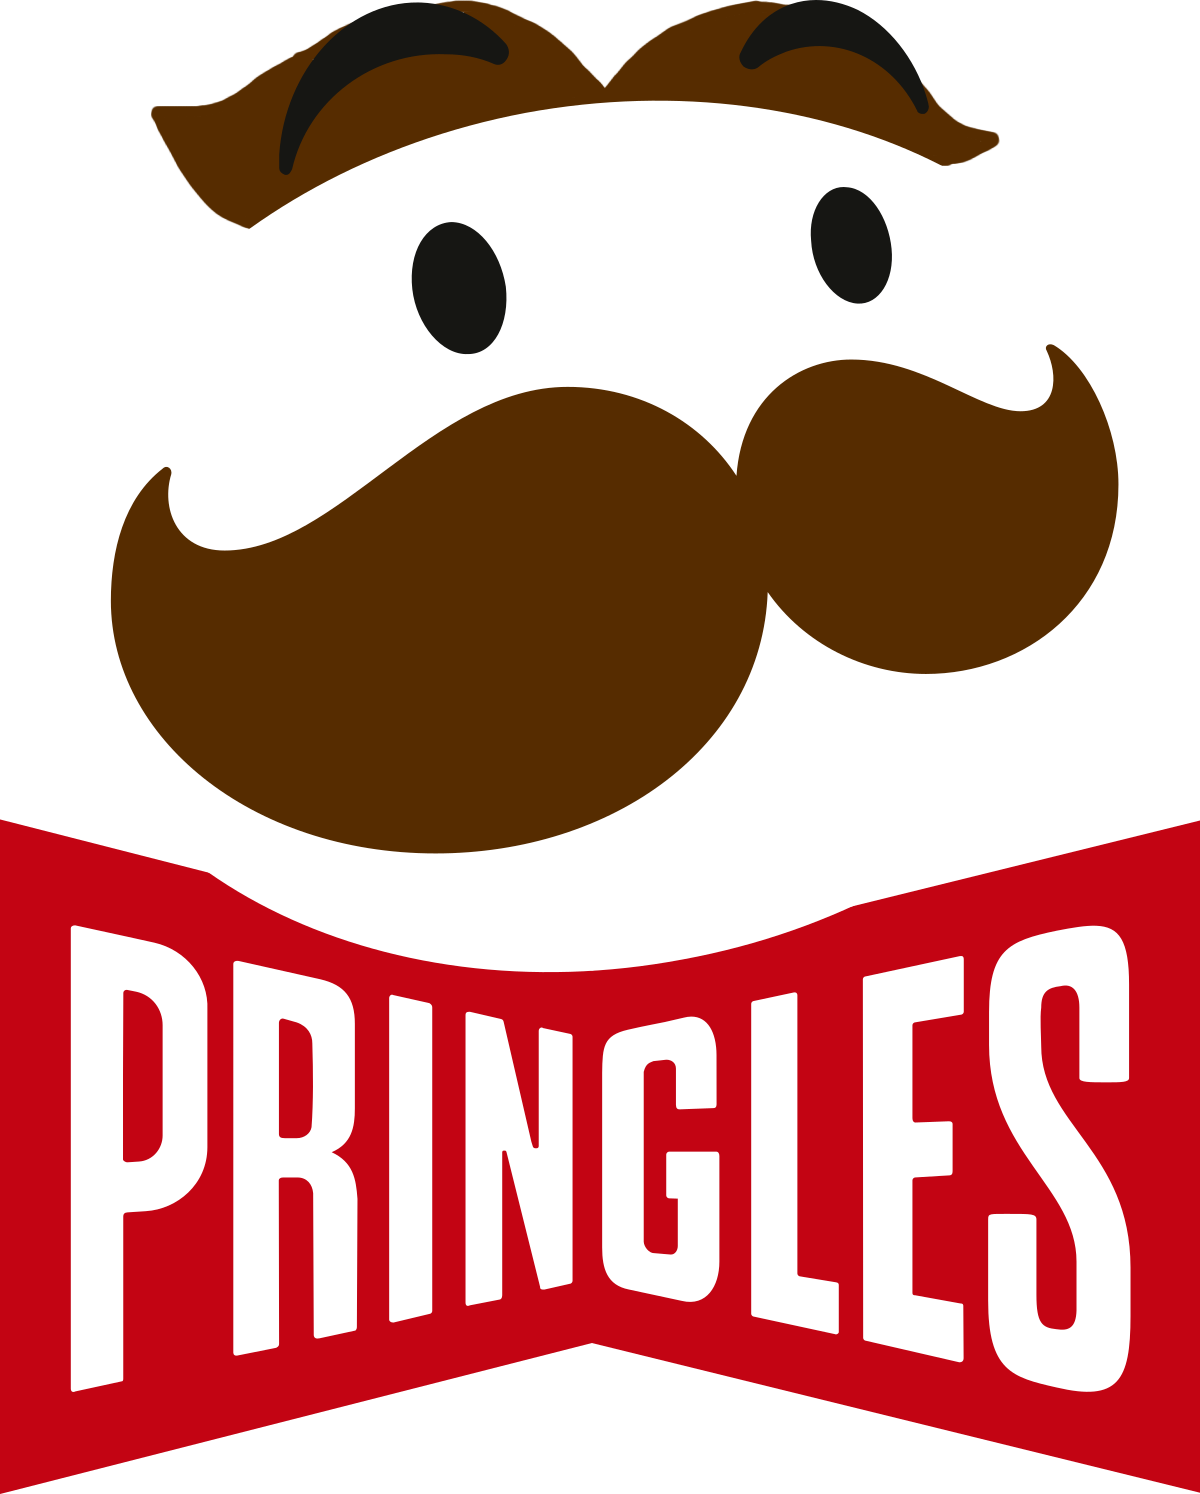 My version of the new Pringles logo by AyayaAyayaGummyCow on DeviantArt